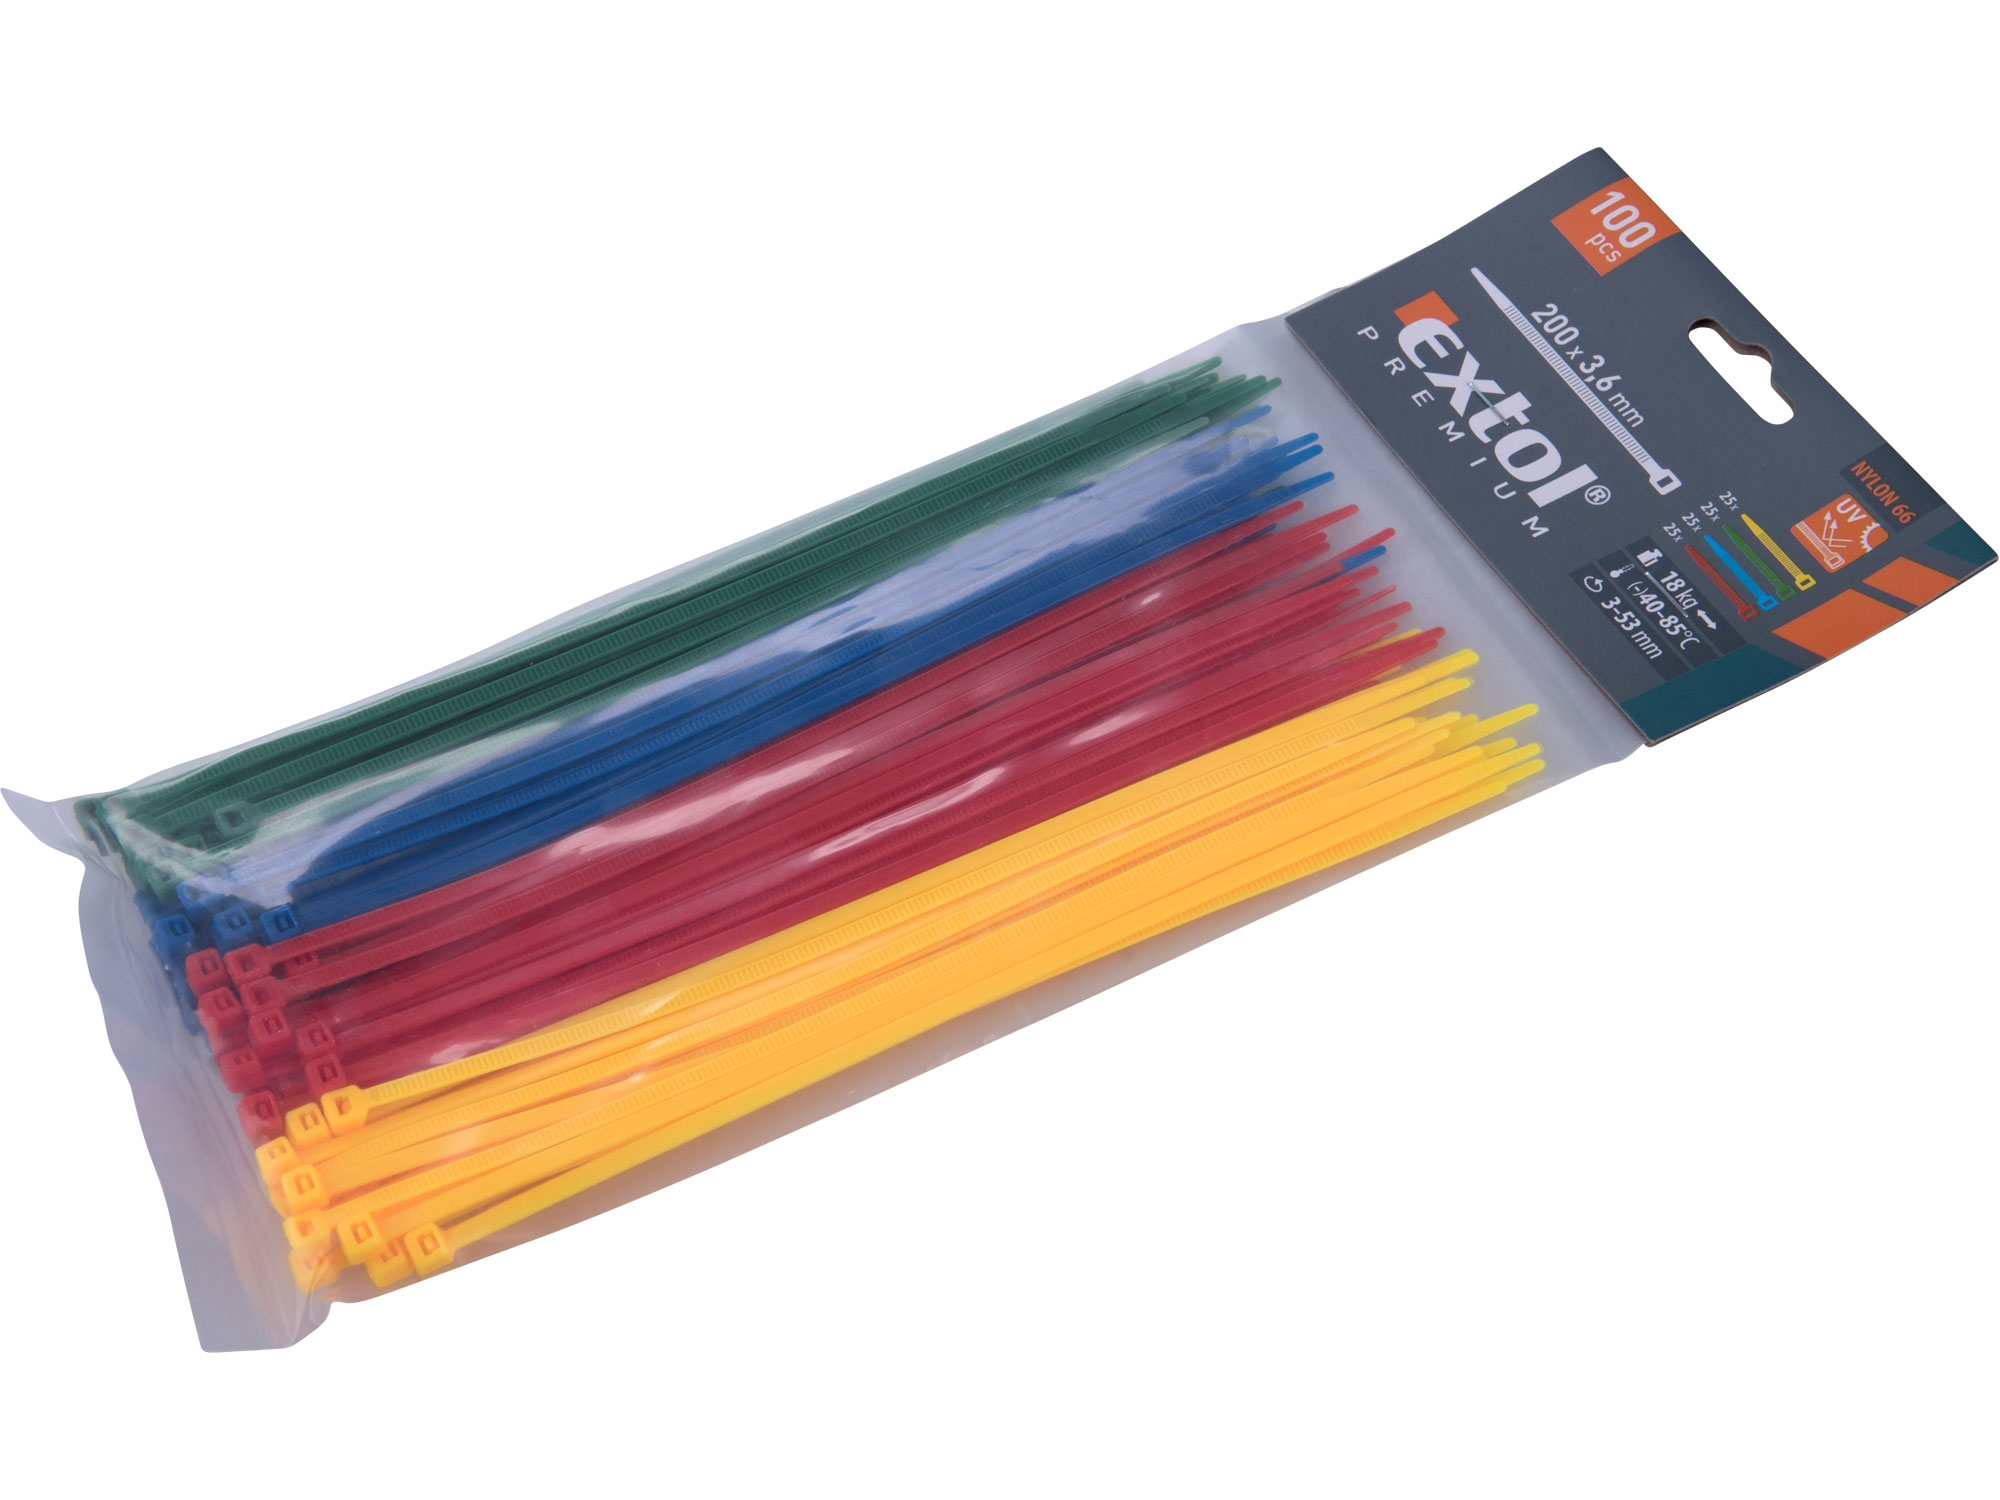 pásky stahovací barevné, 200x3,6mm, 100ks, (4x25ks), 4 barvy, nylon, EXTOL PREMIUM 8856196